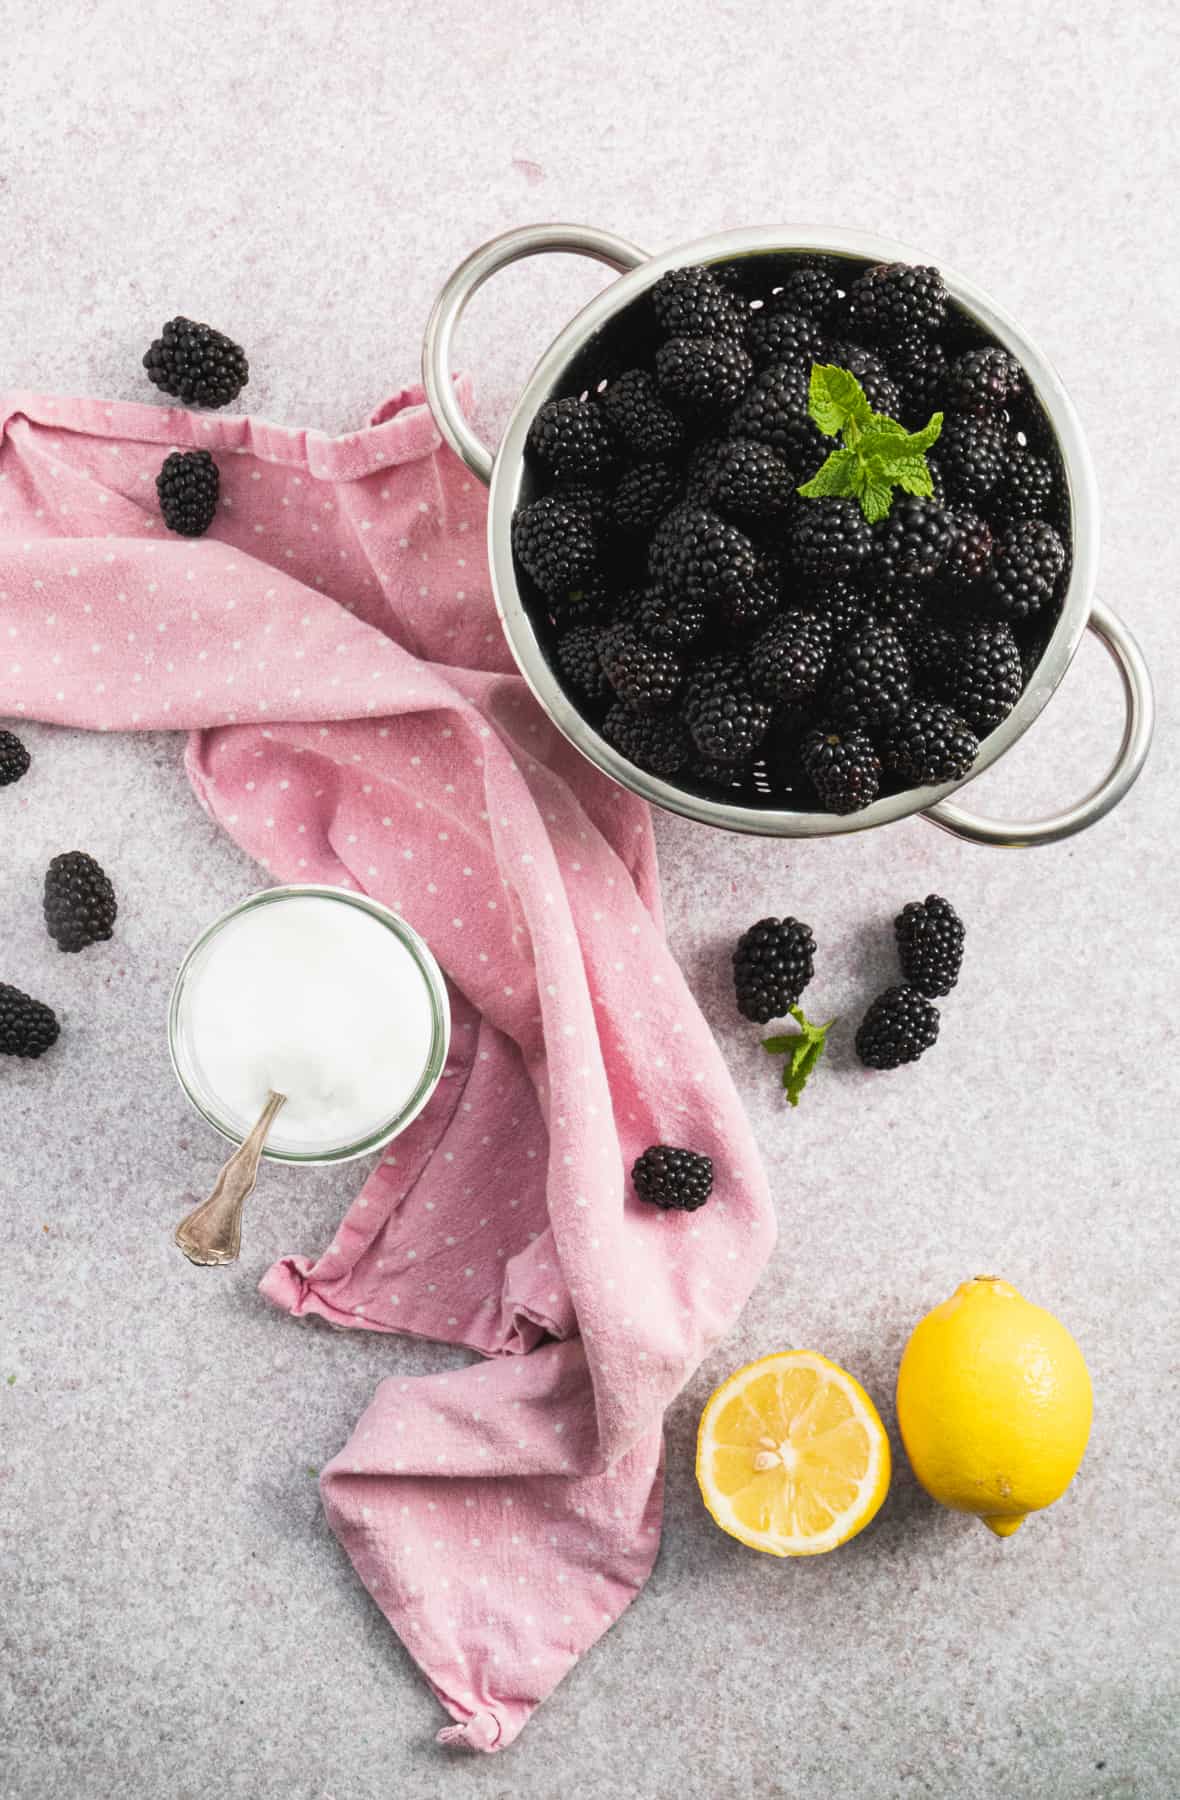 Top view of the ingredients to make jam, fresh blackberries in a colander, sugar and lemon.